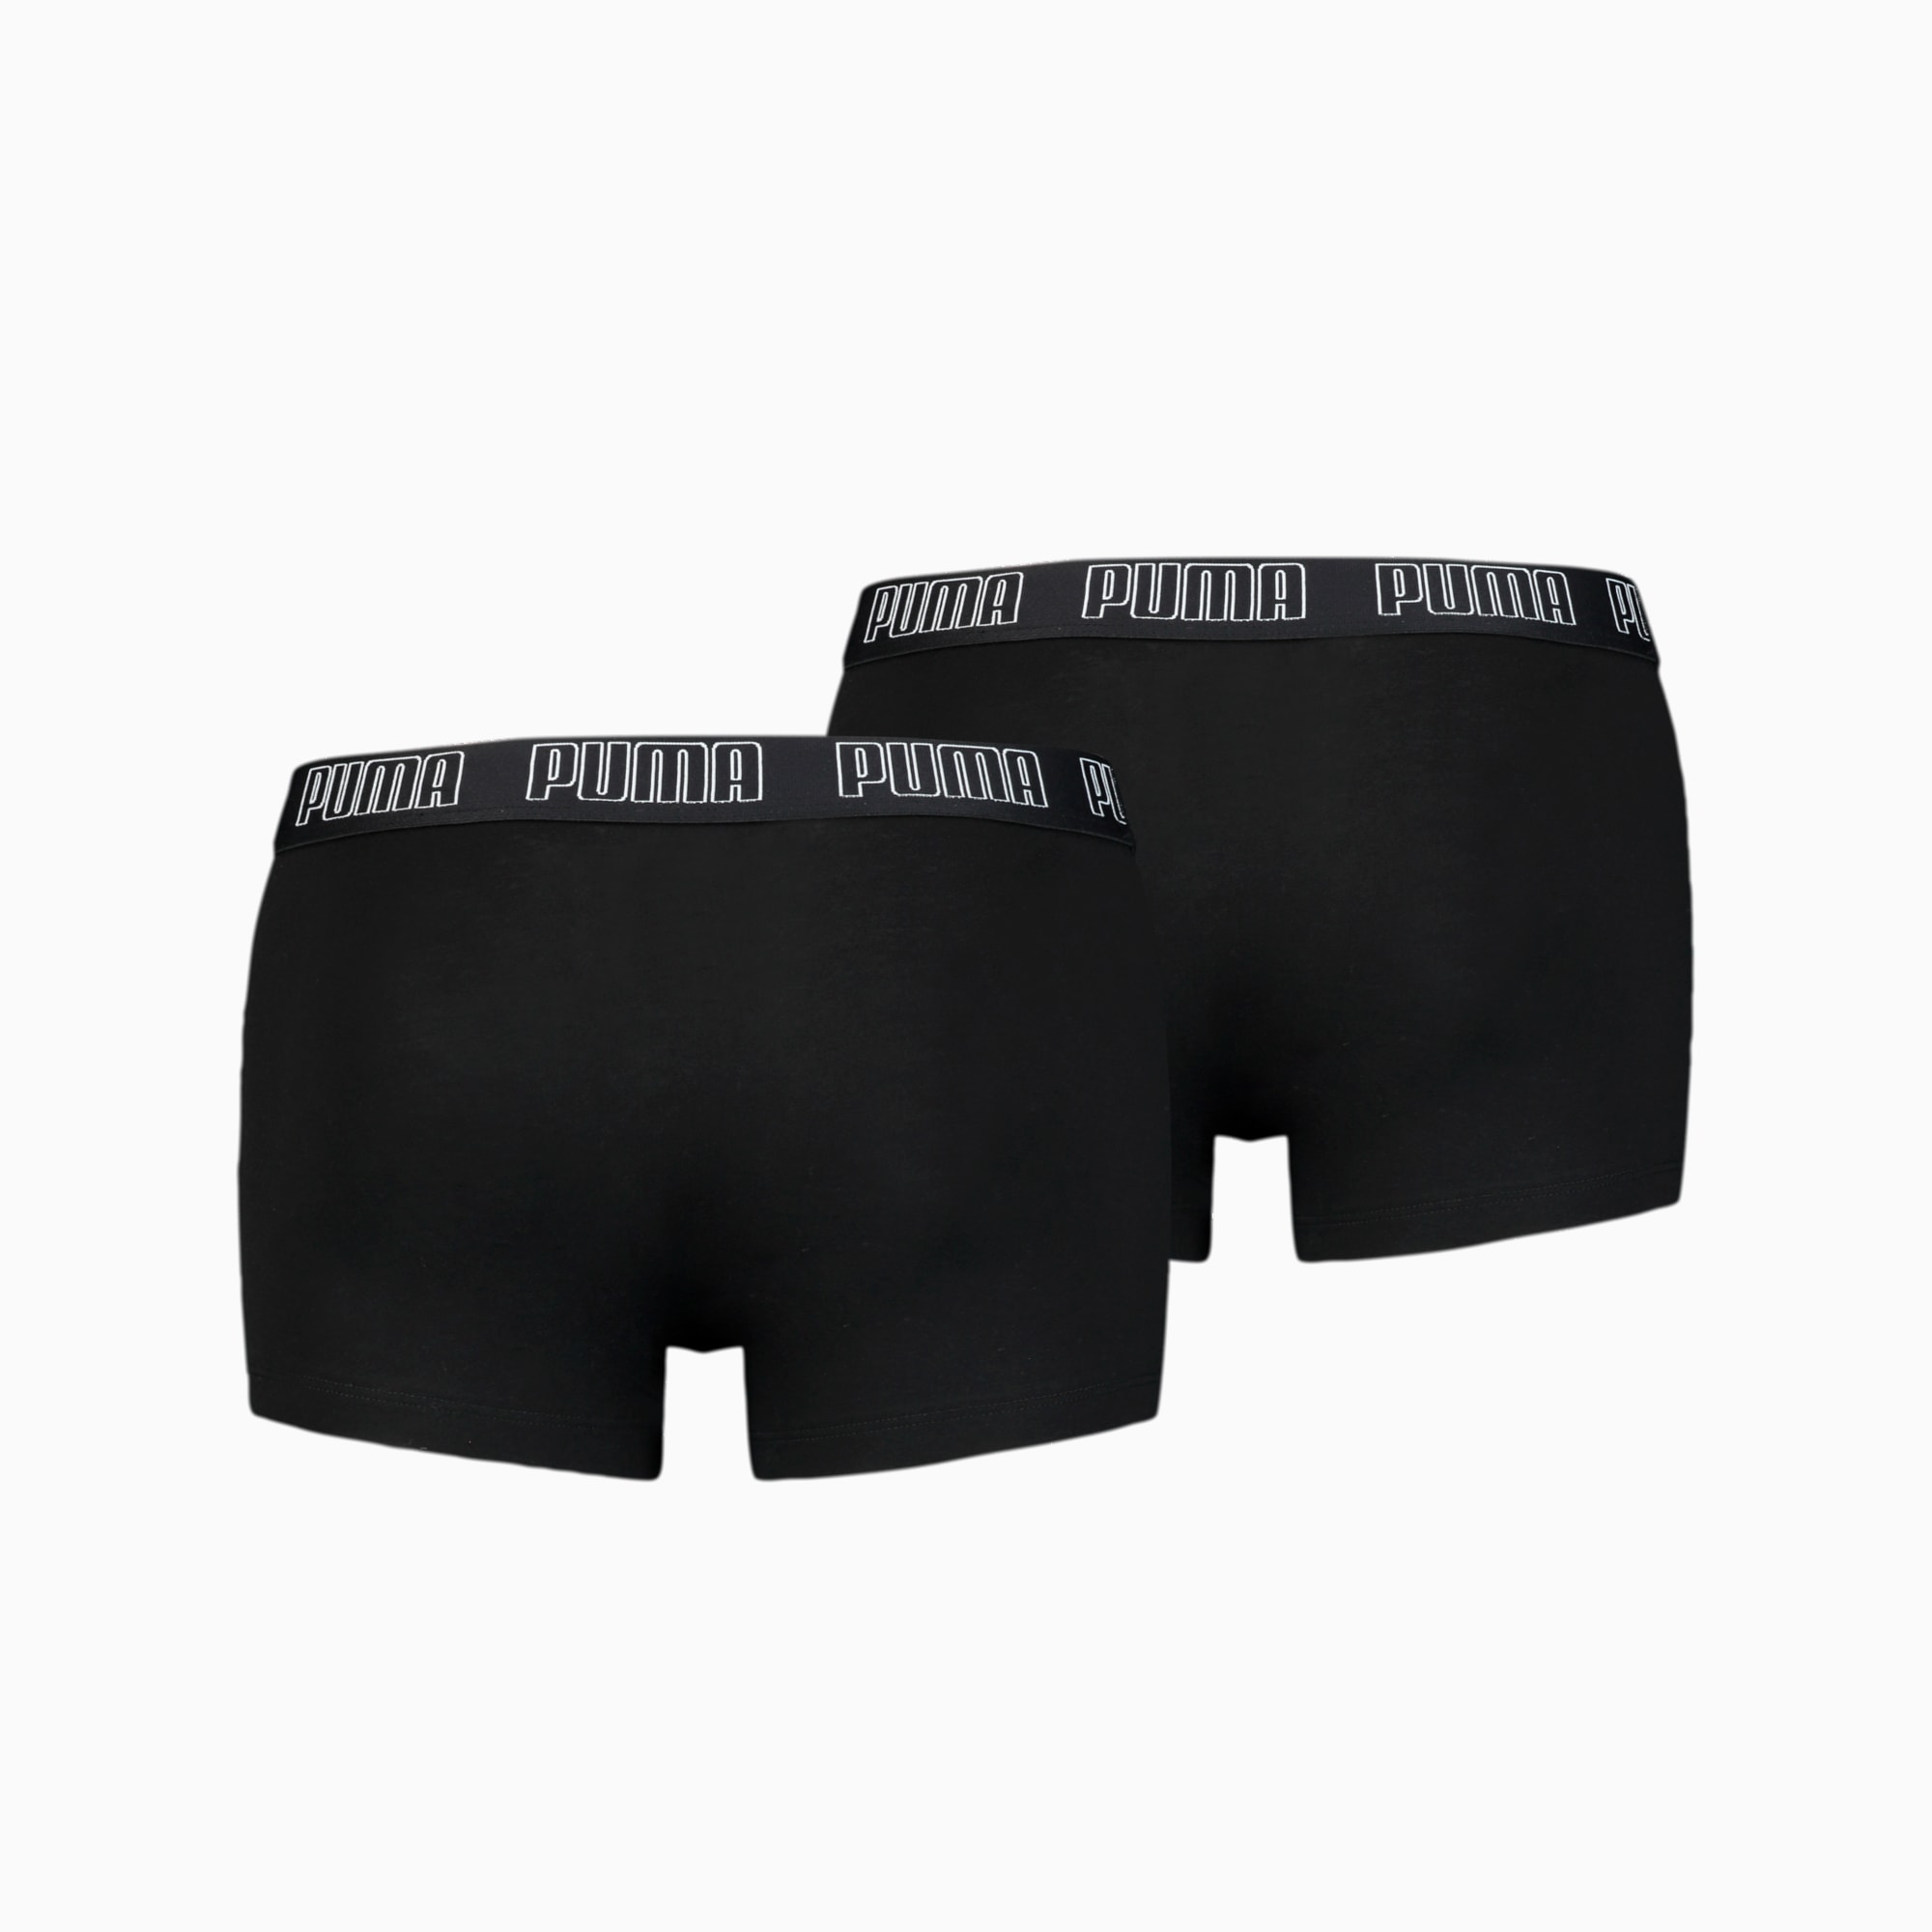 PUMA Basic Men's Trunks 2 Pack, Black, Size S, Clothing